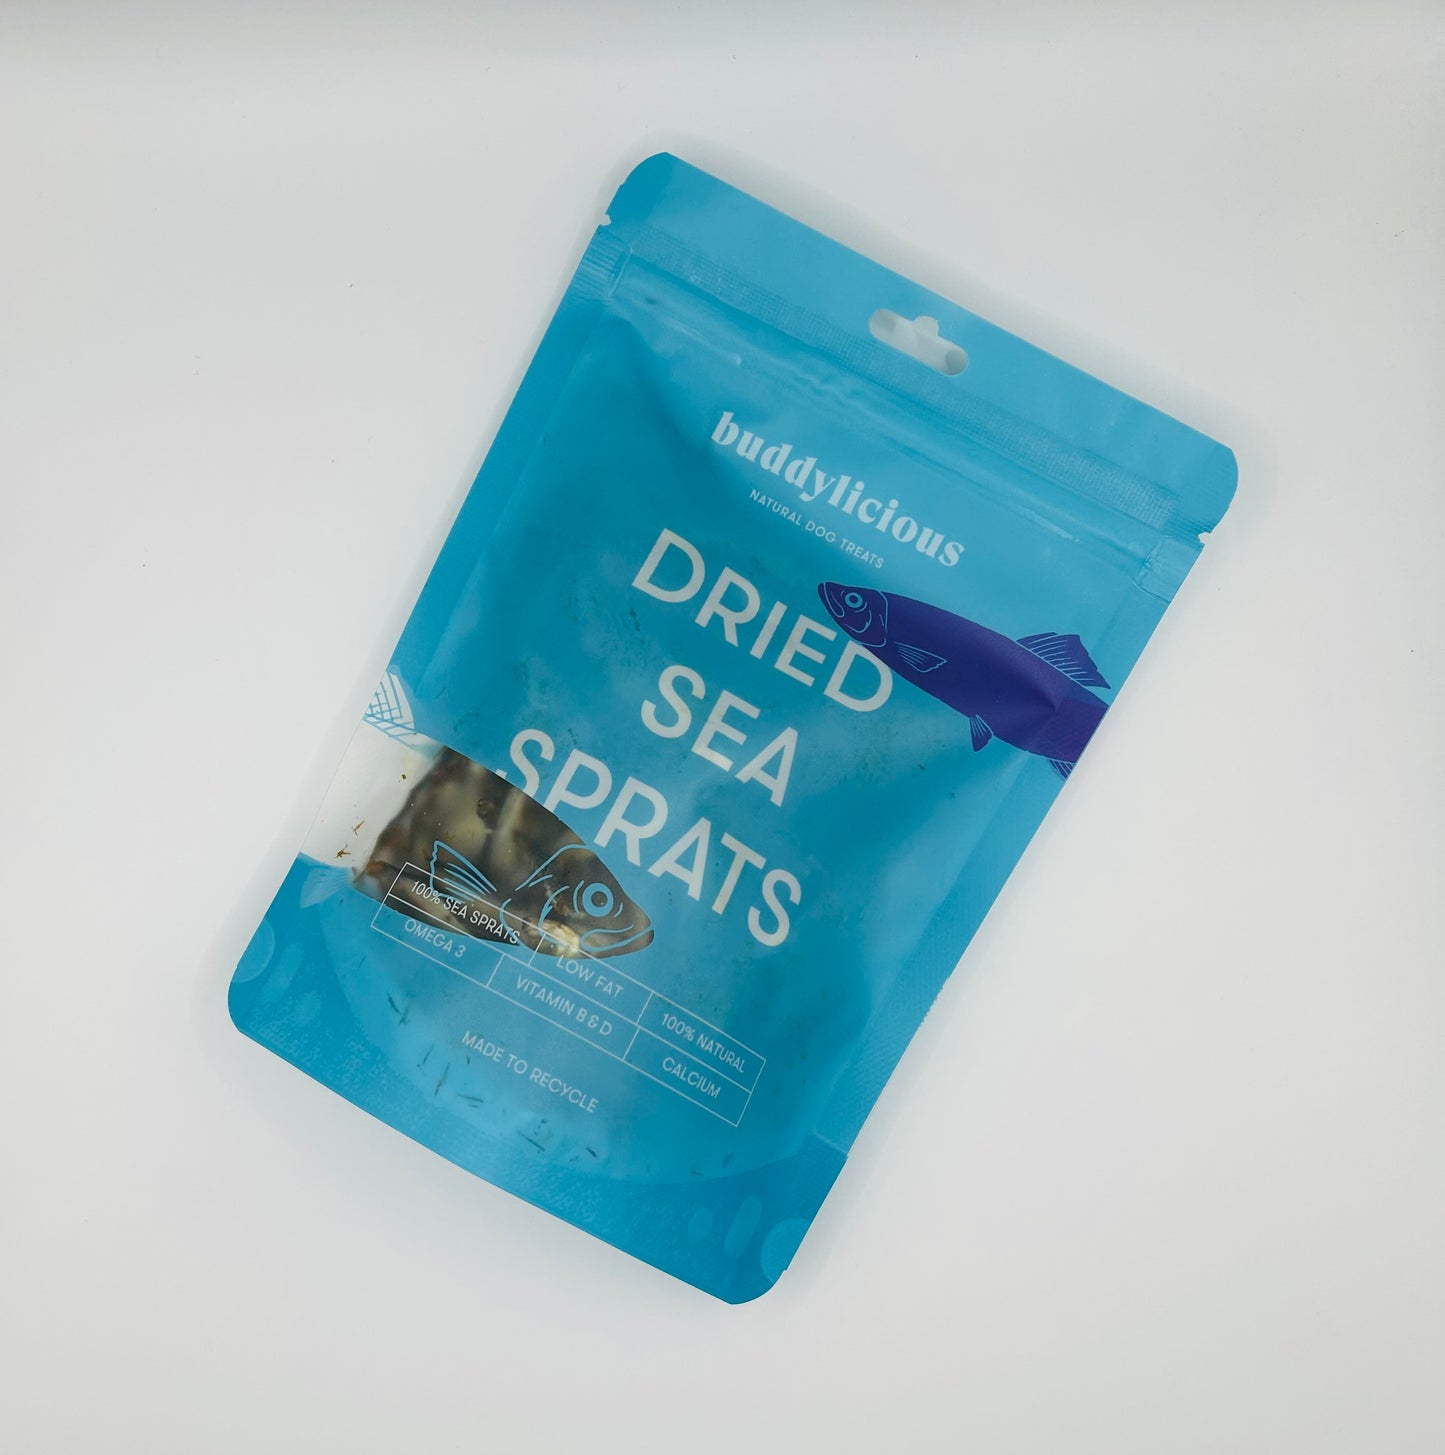 Dried Sea Sprats